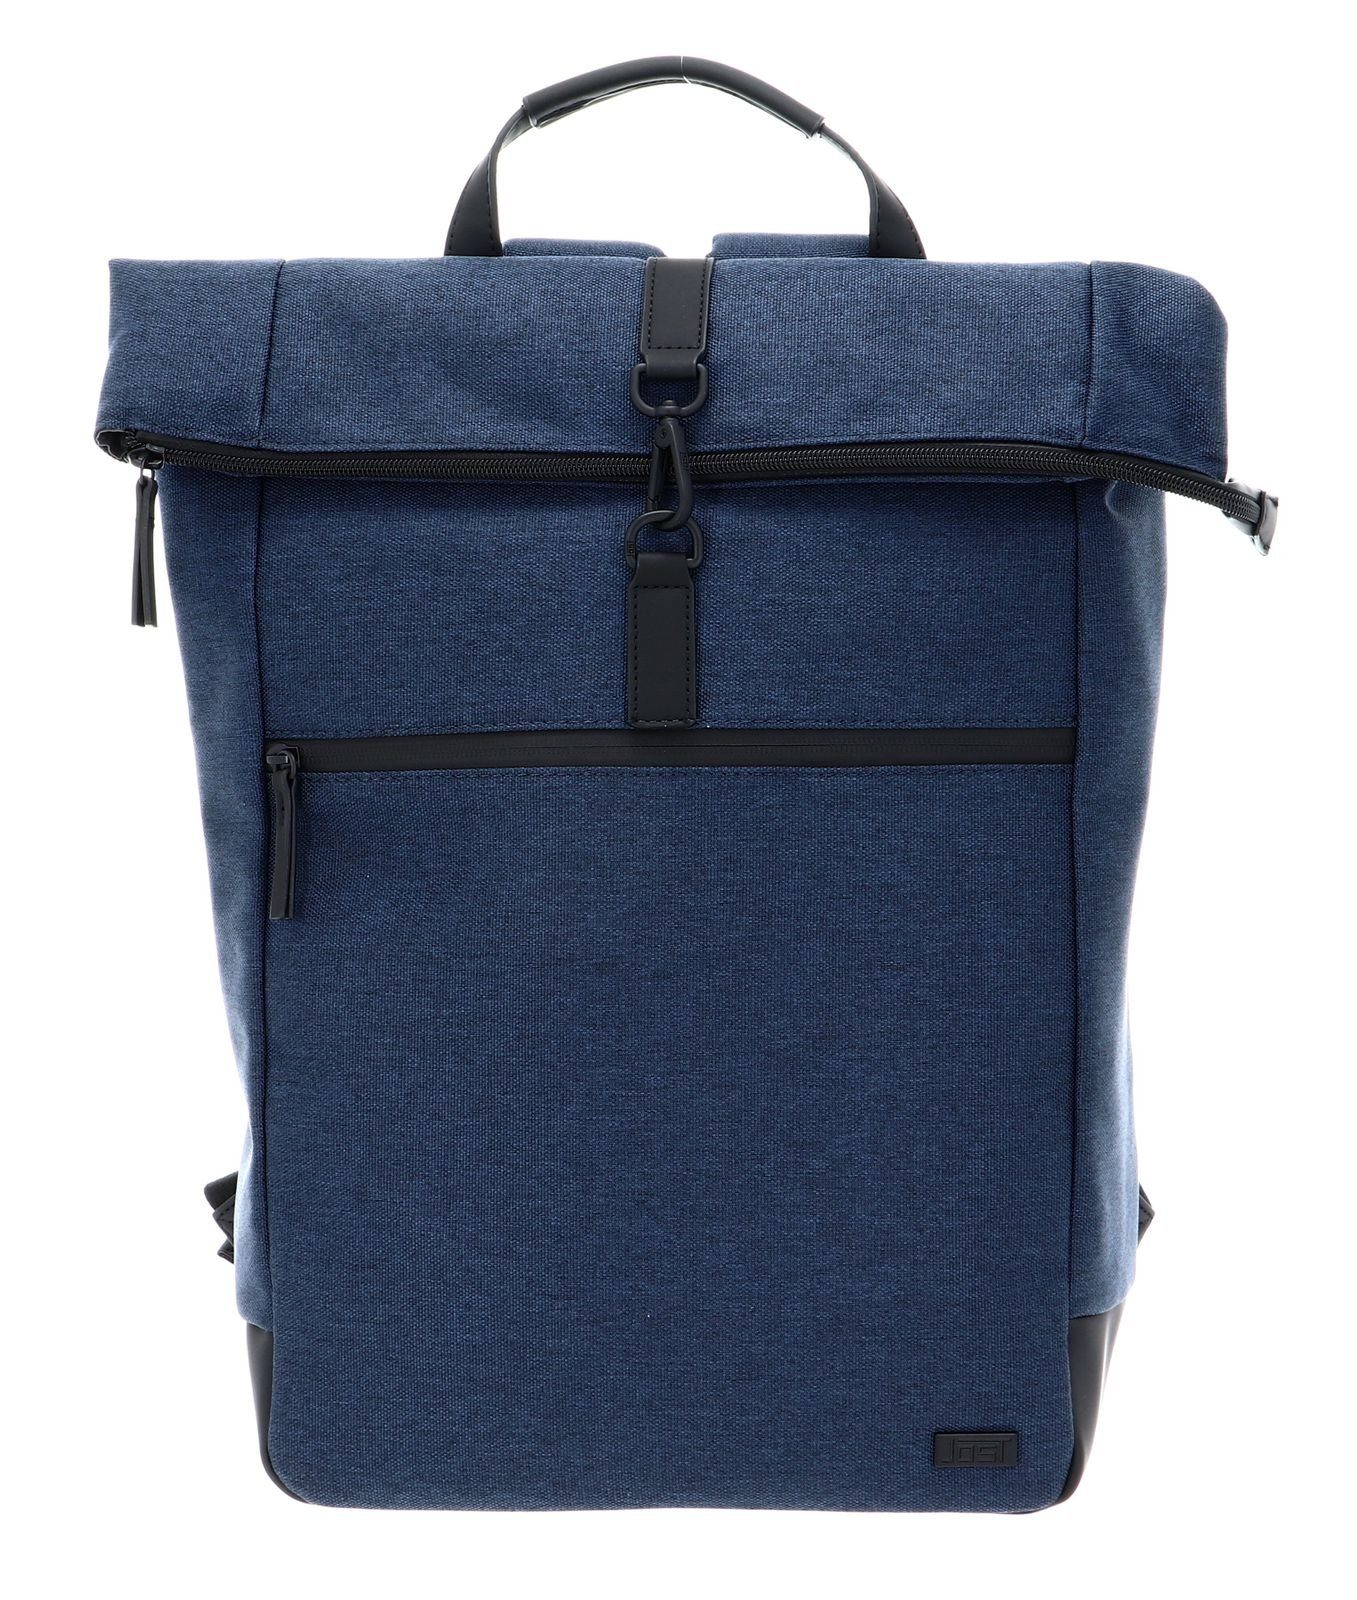 Jost Rucksack Bags Courier Blue